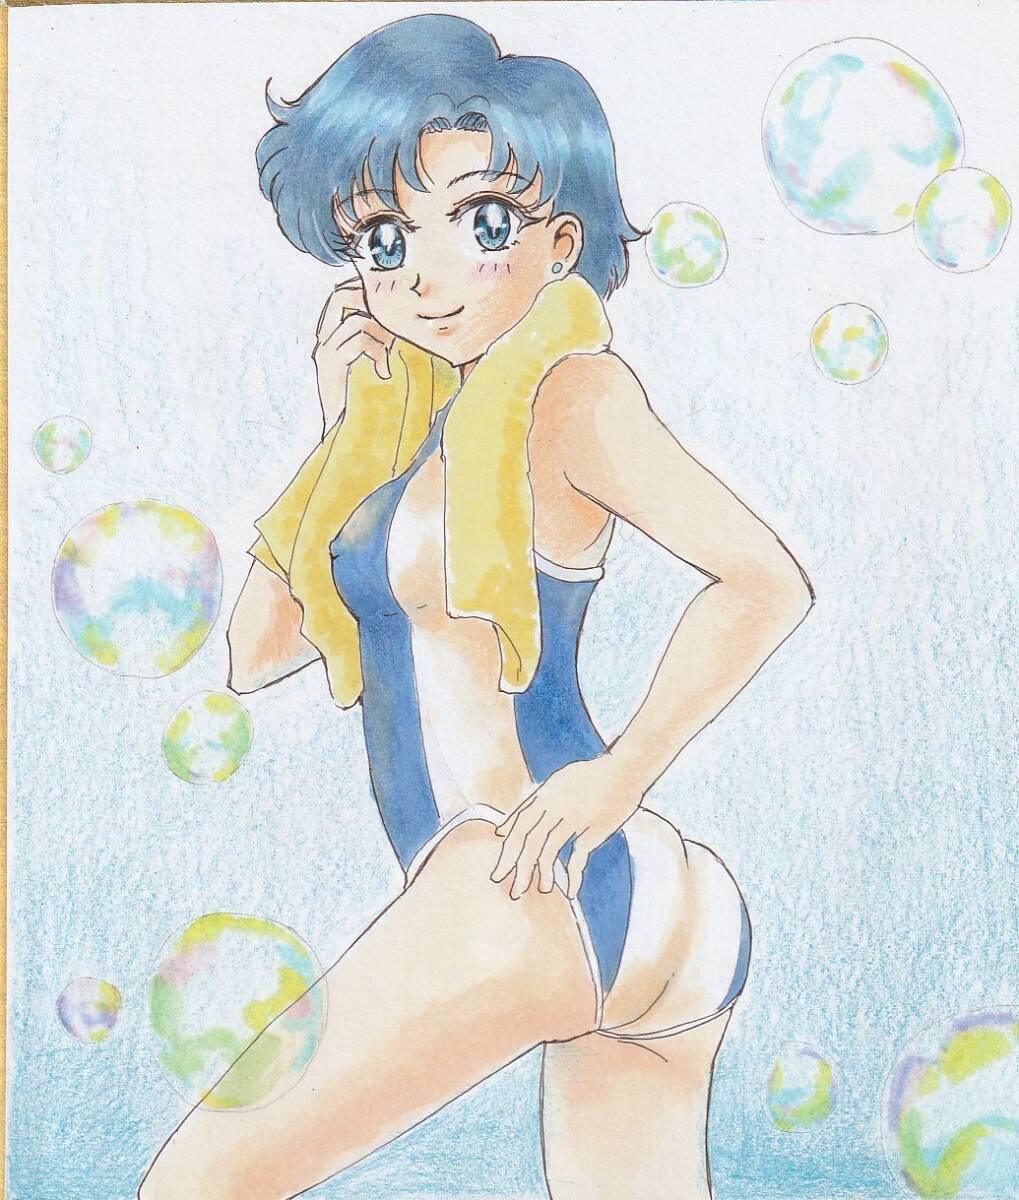 Hand-drawn illustration [Sailor Moon] Ami Mizuno transparent swimsuit, comics, anime goods, hand drawn illustration